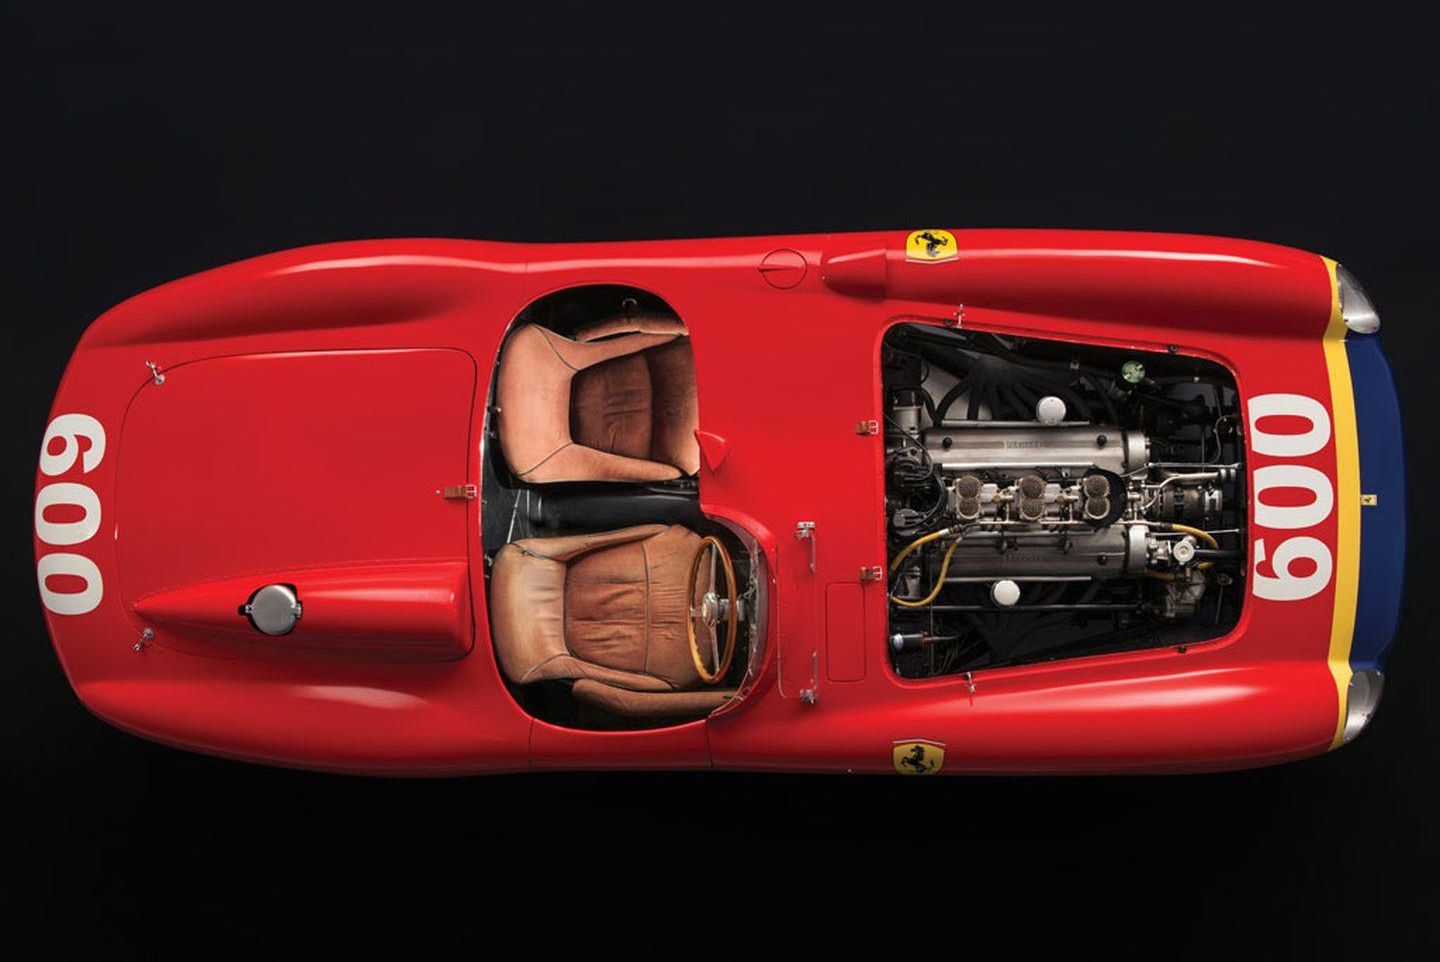 Solo se fabricaron cuatro unidades de este Ferrari 290 MM.